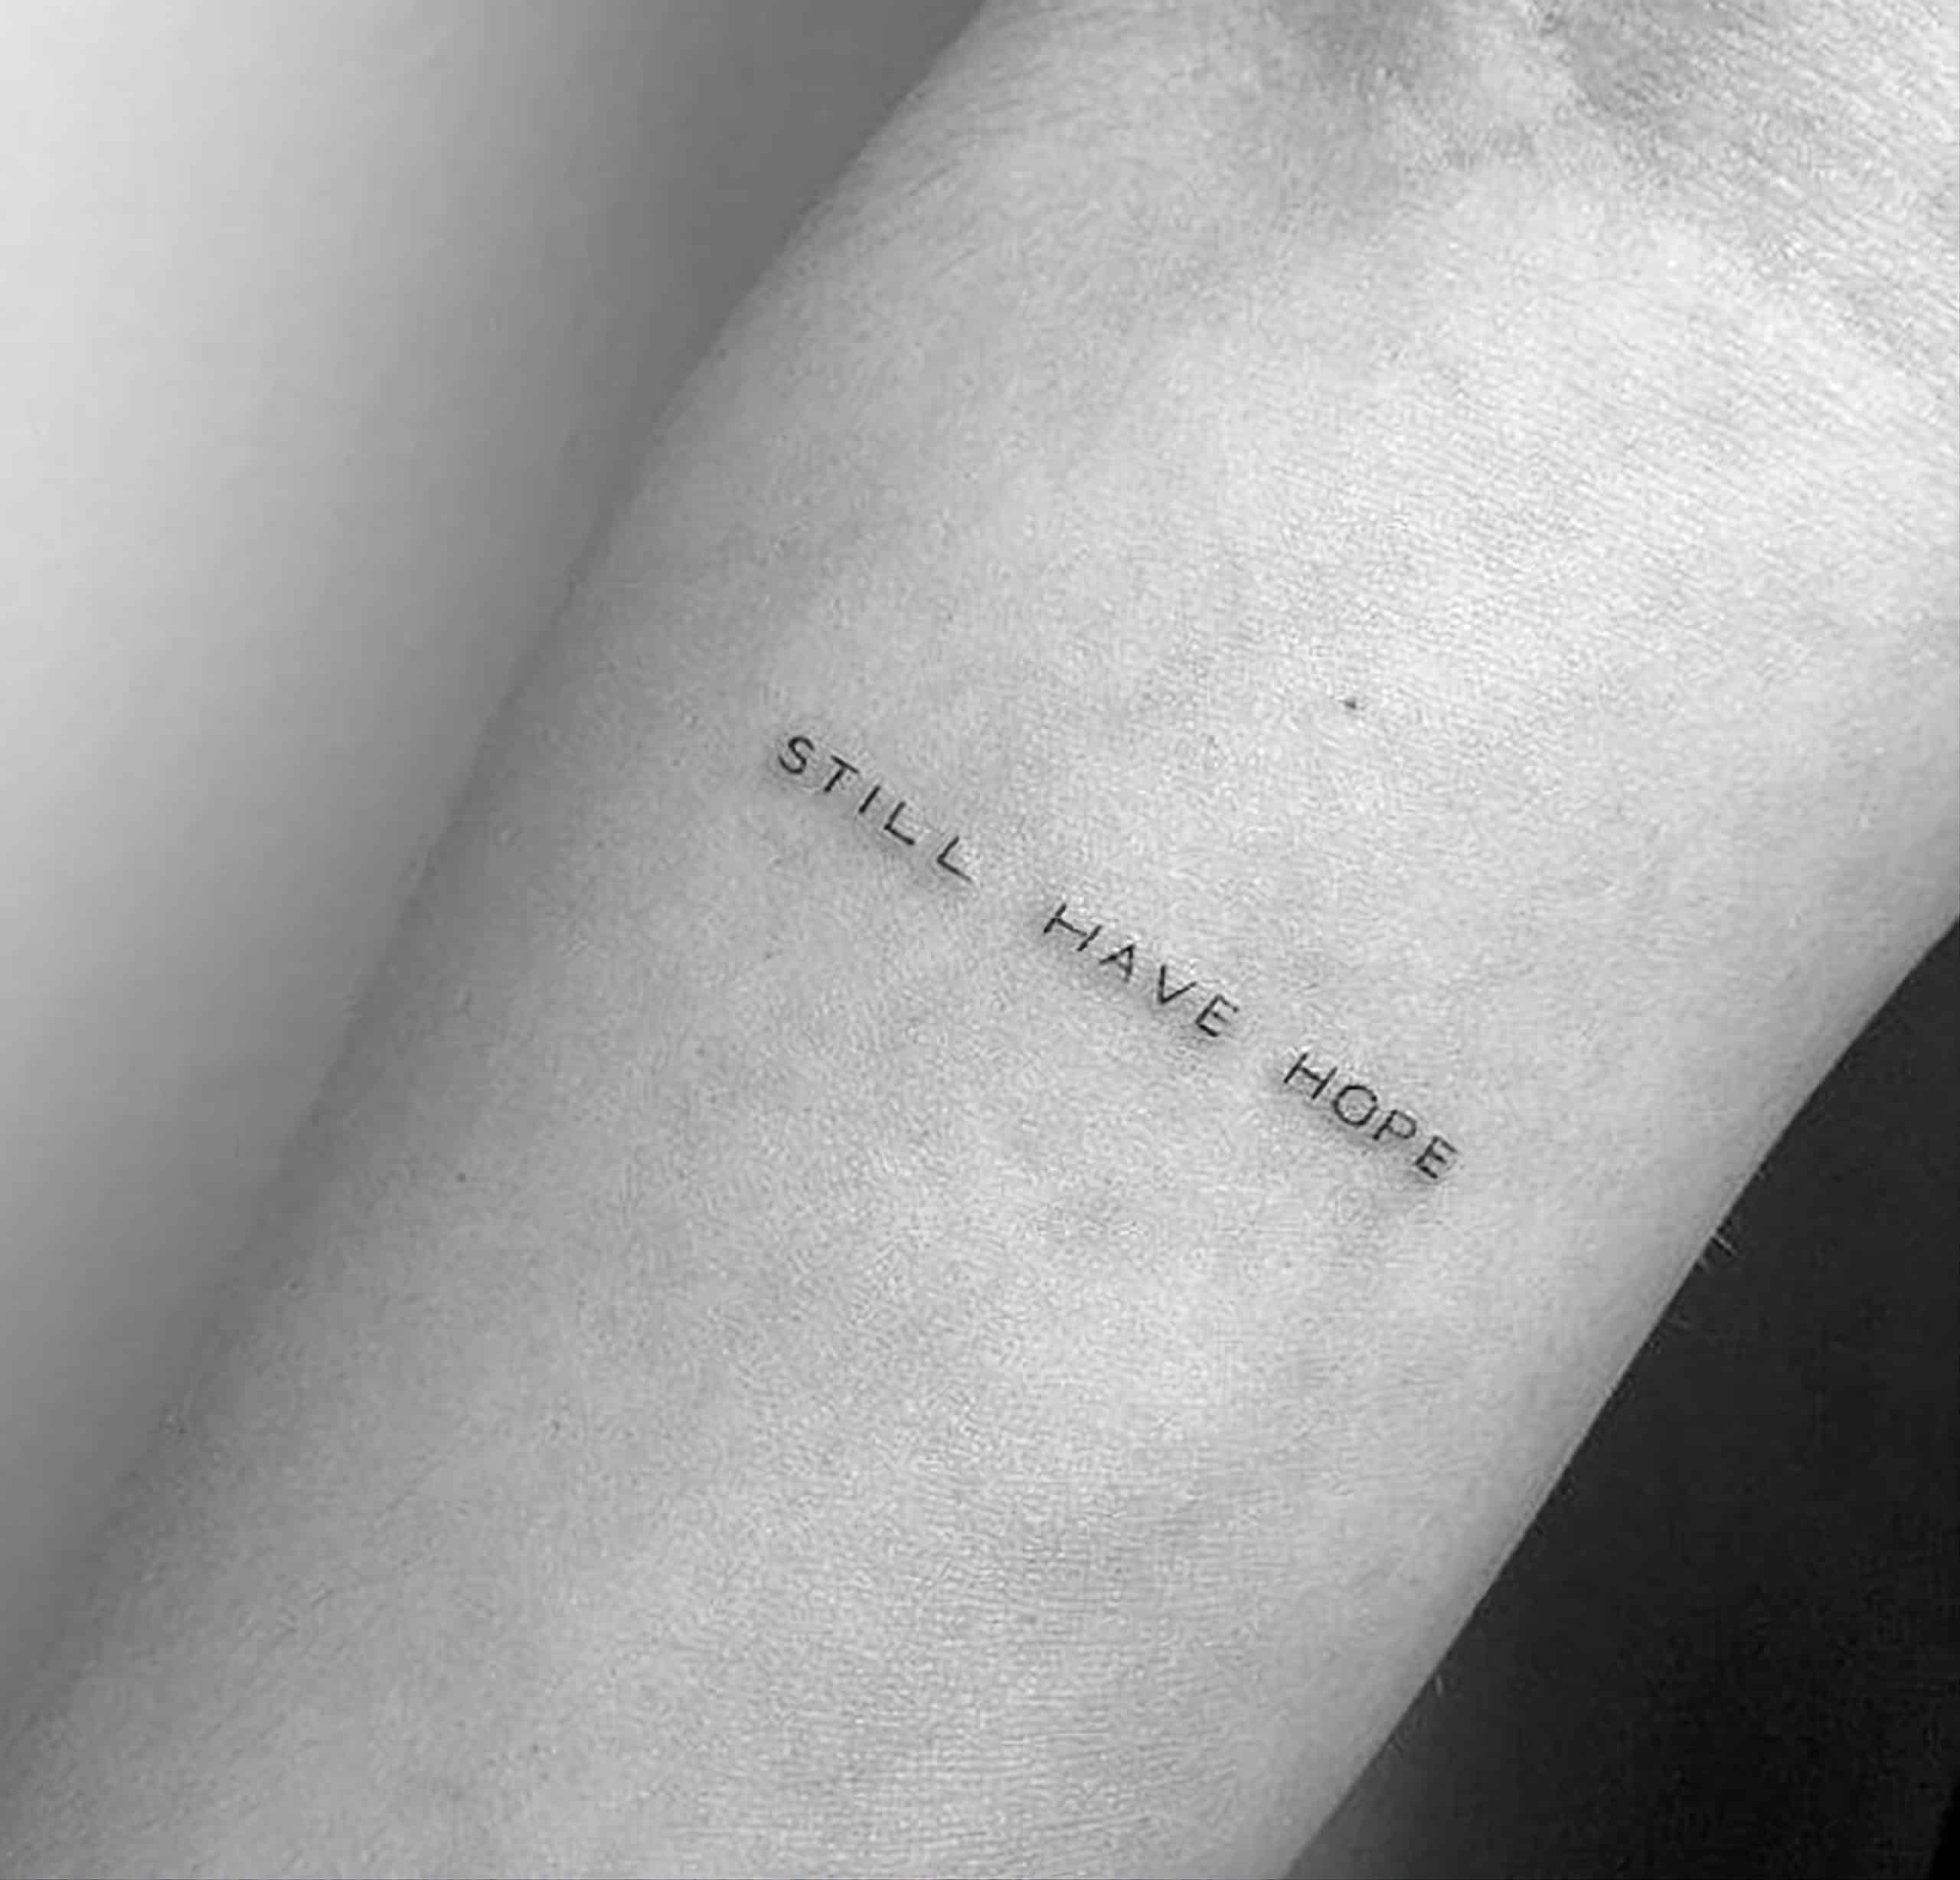 Frases para tatuarse - Still have hope